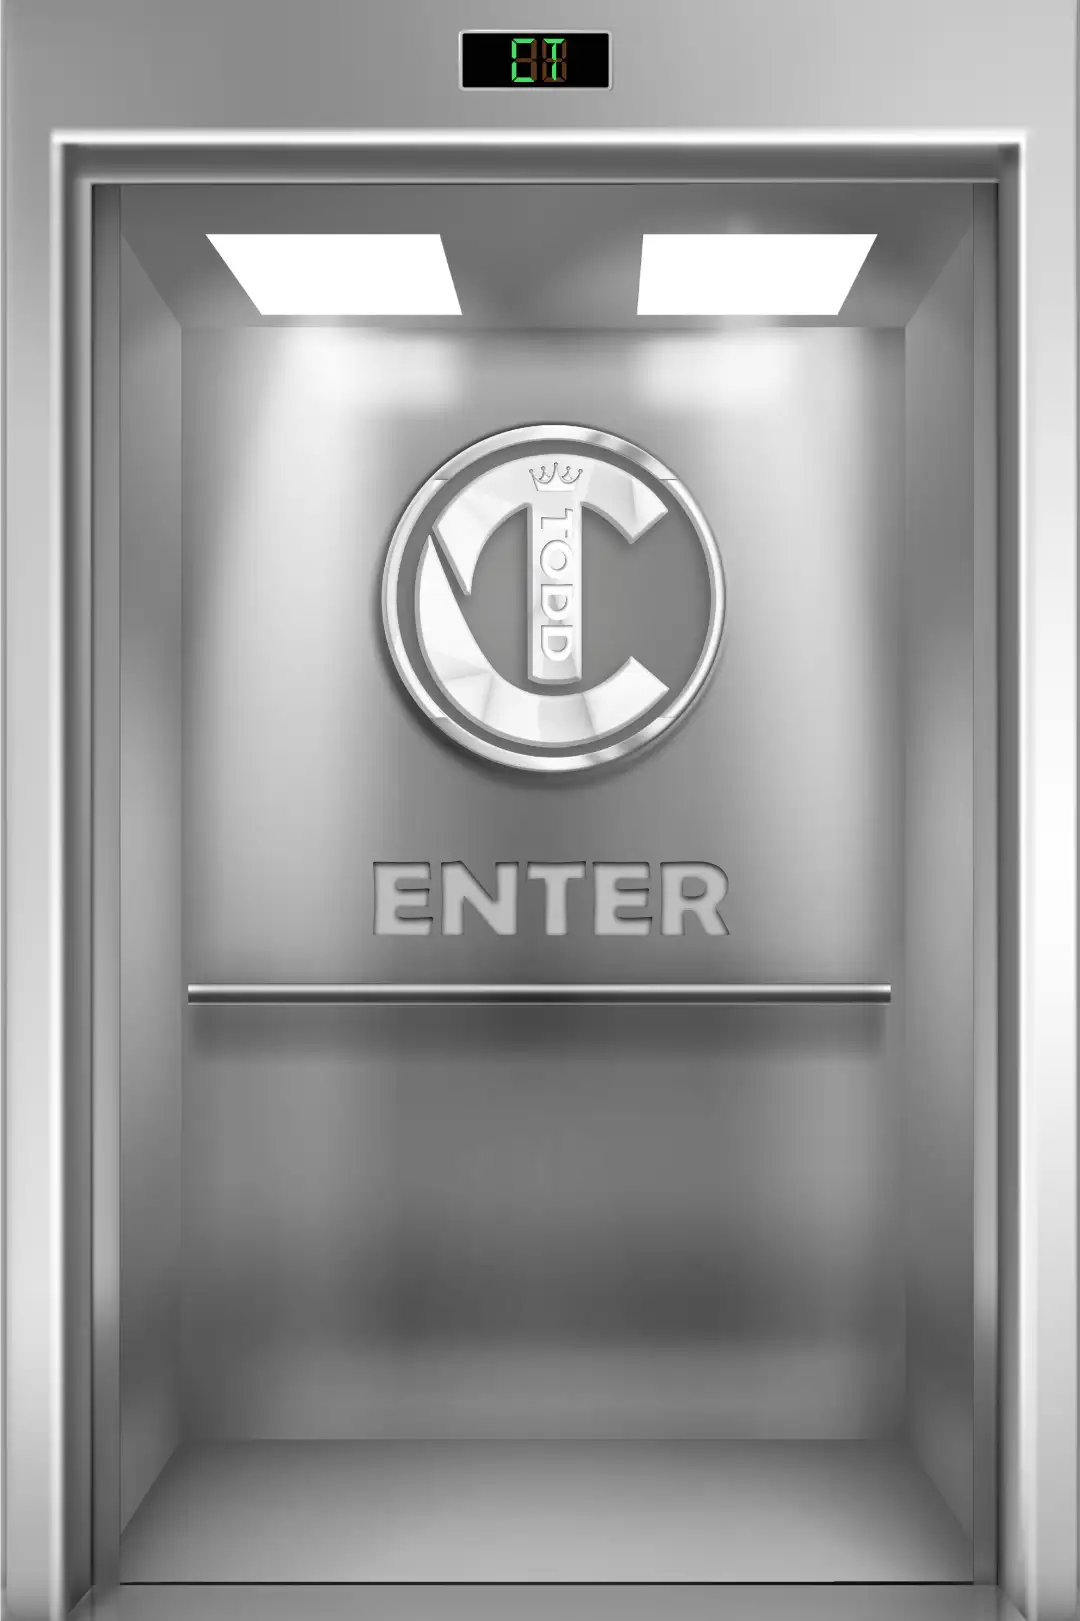 Elevator Image